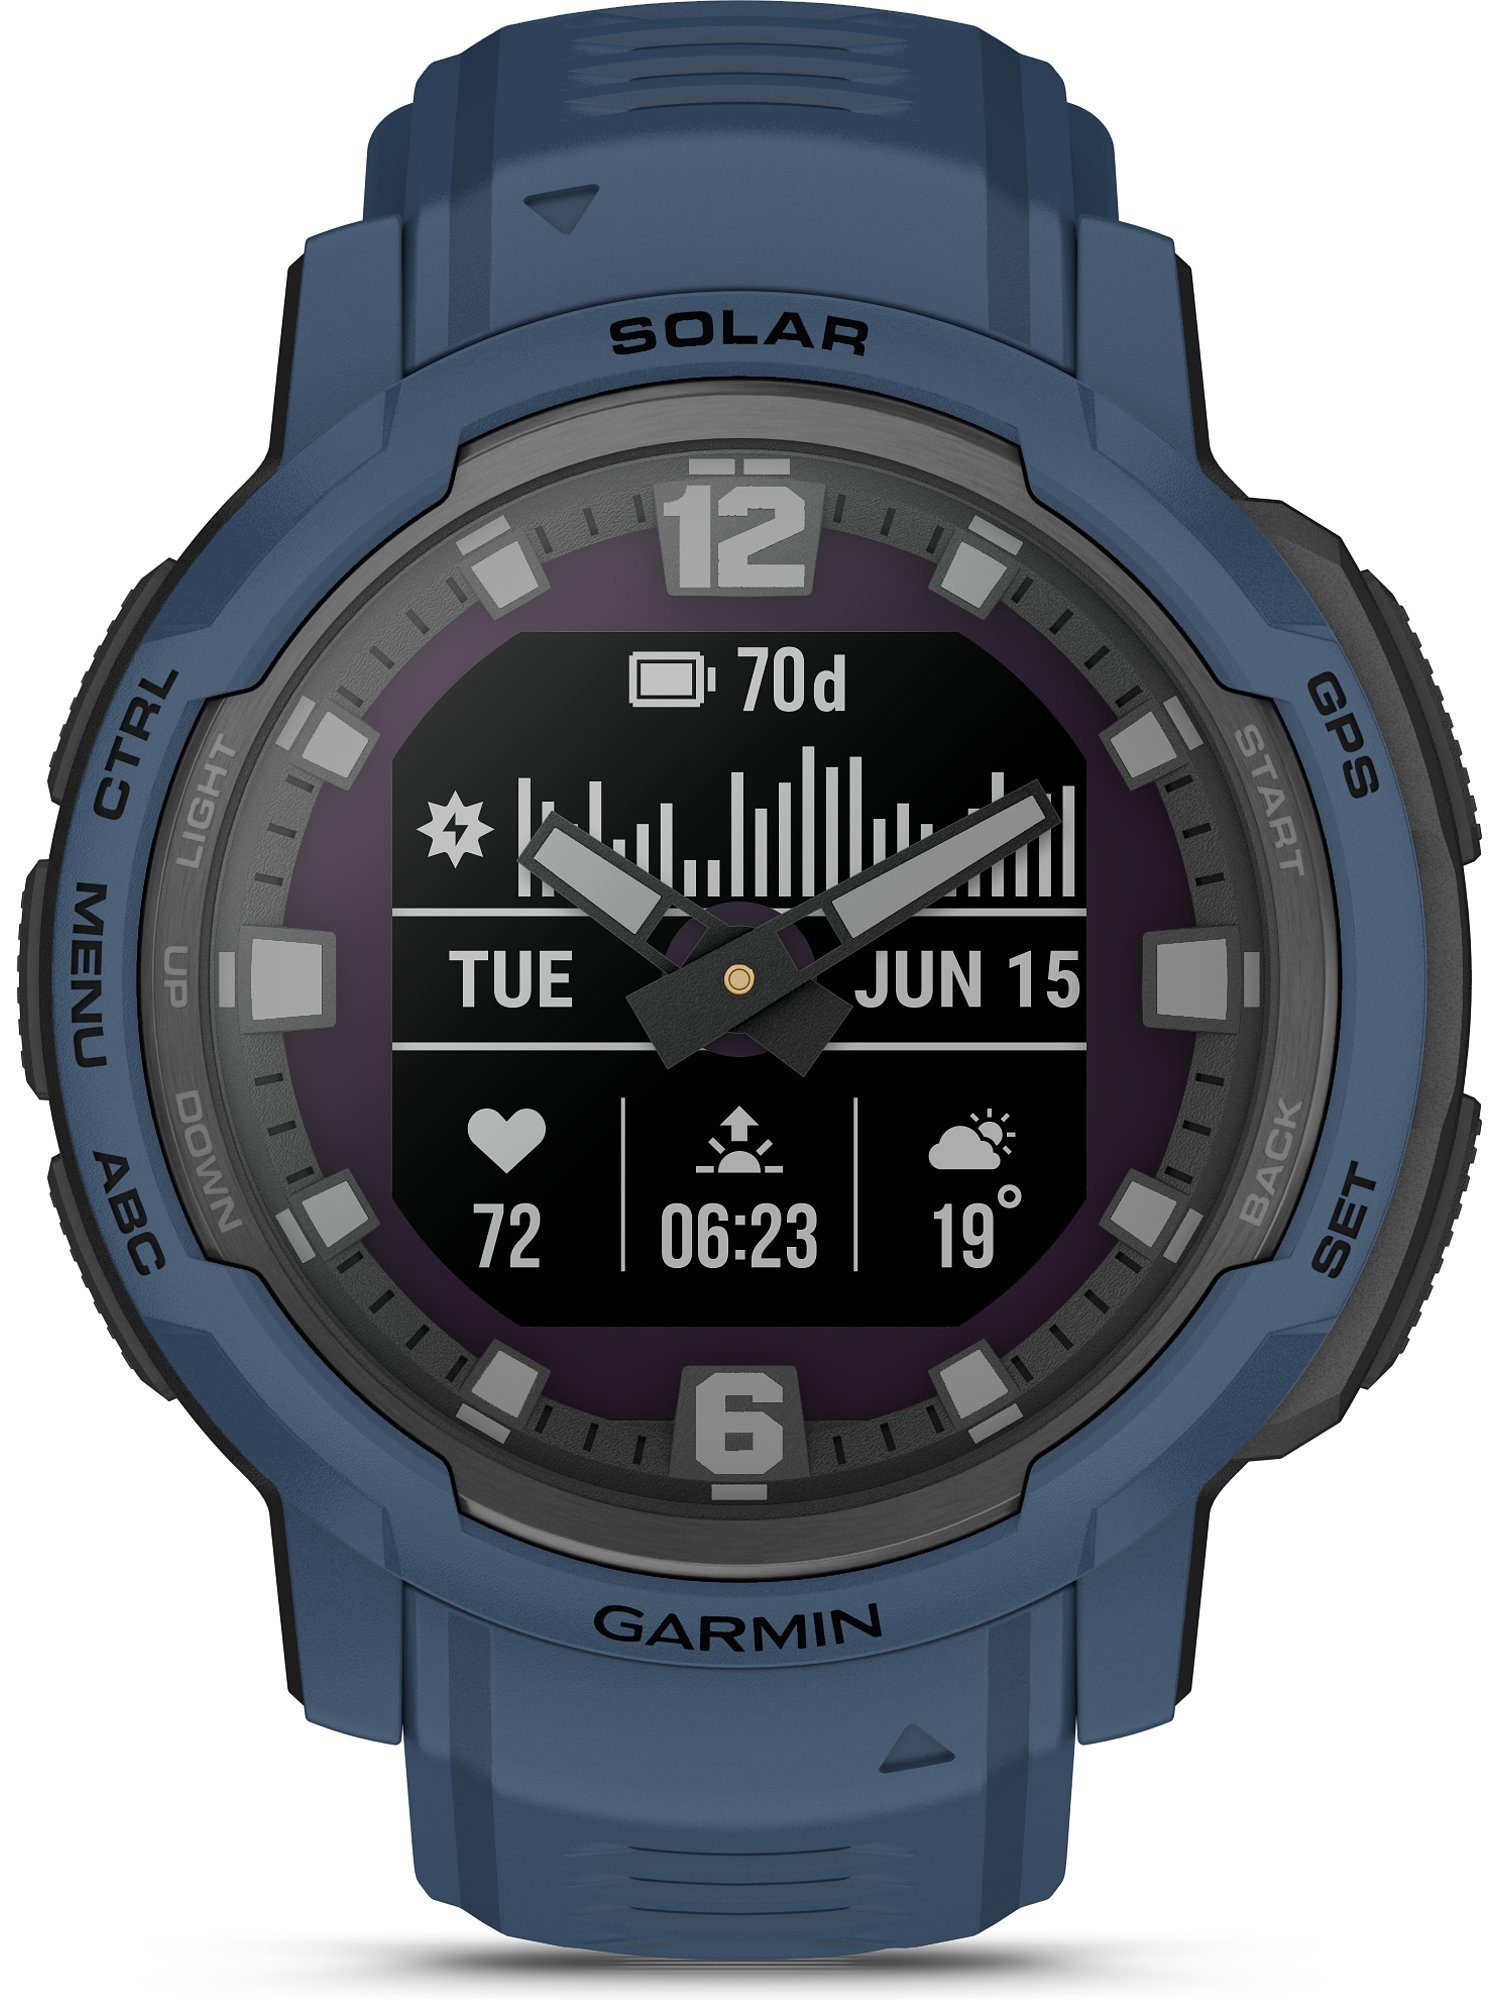 Garmin Quarzuhr Garmin Unisex-Smartwatch Analog Solar, Sportuhr dunkelblau